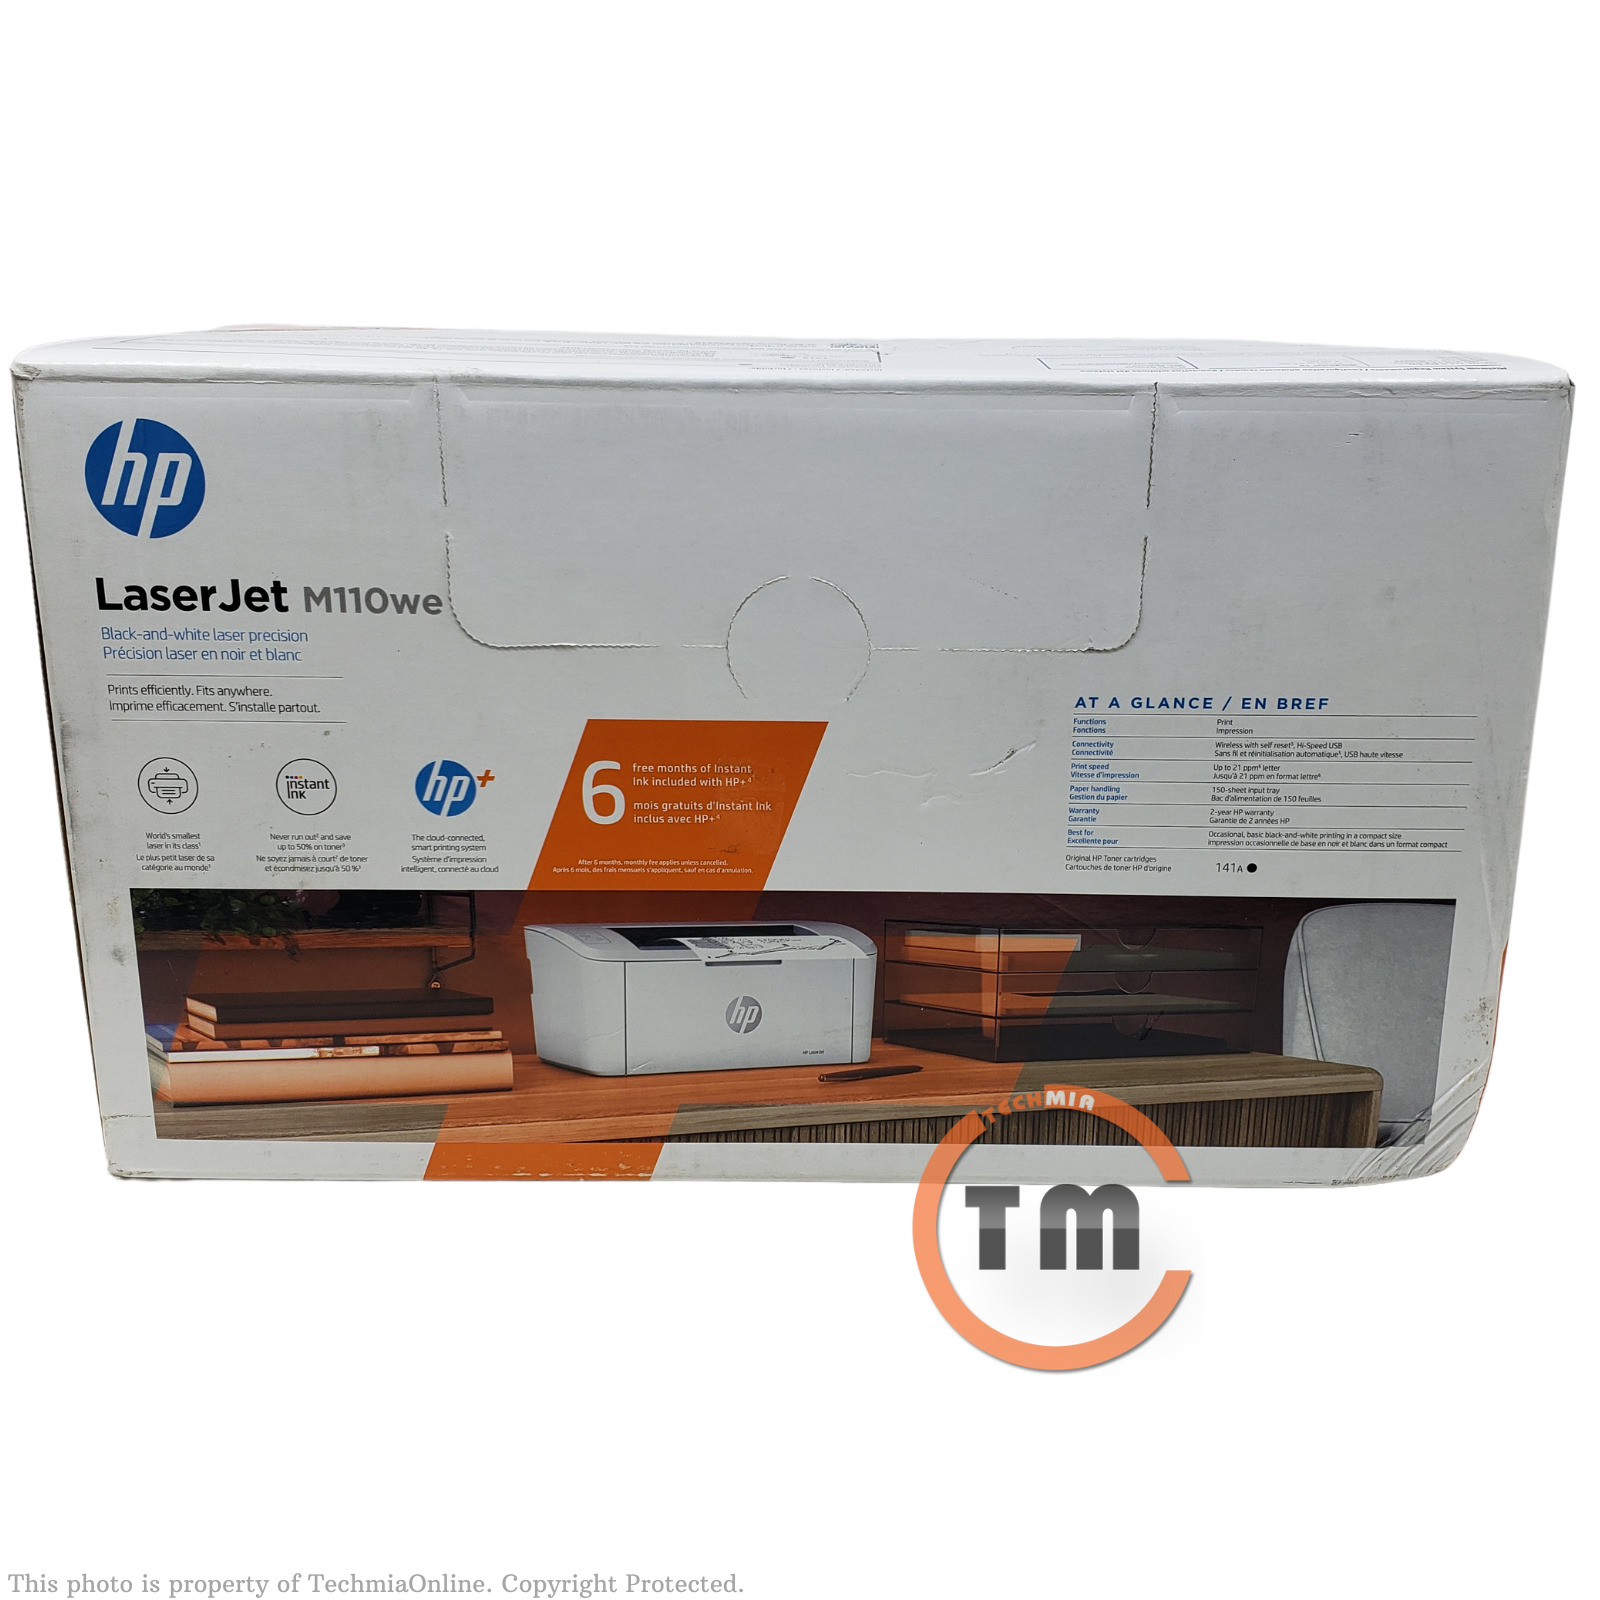 HP LaserJet M110we Wireless Monochrome Black & White Laser Printer™